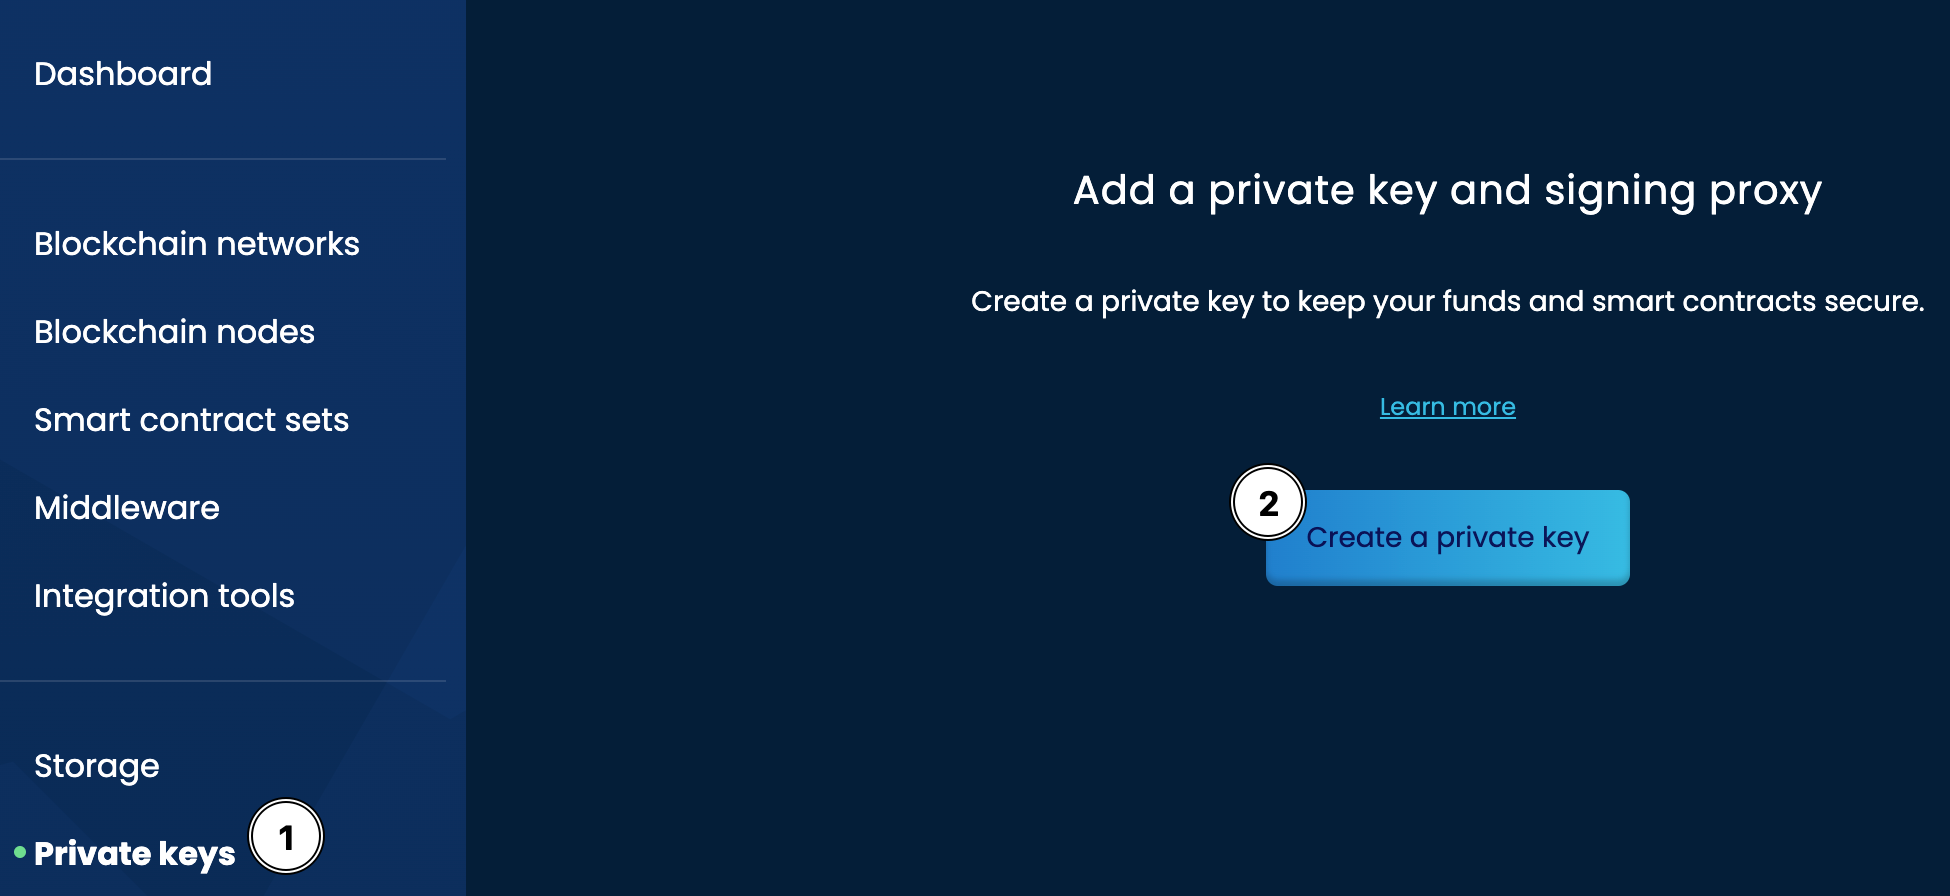 Private Key